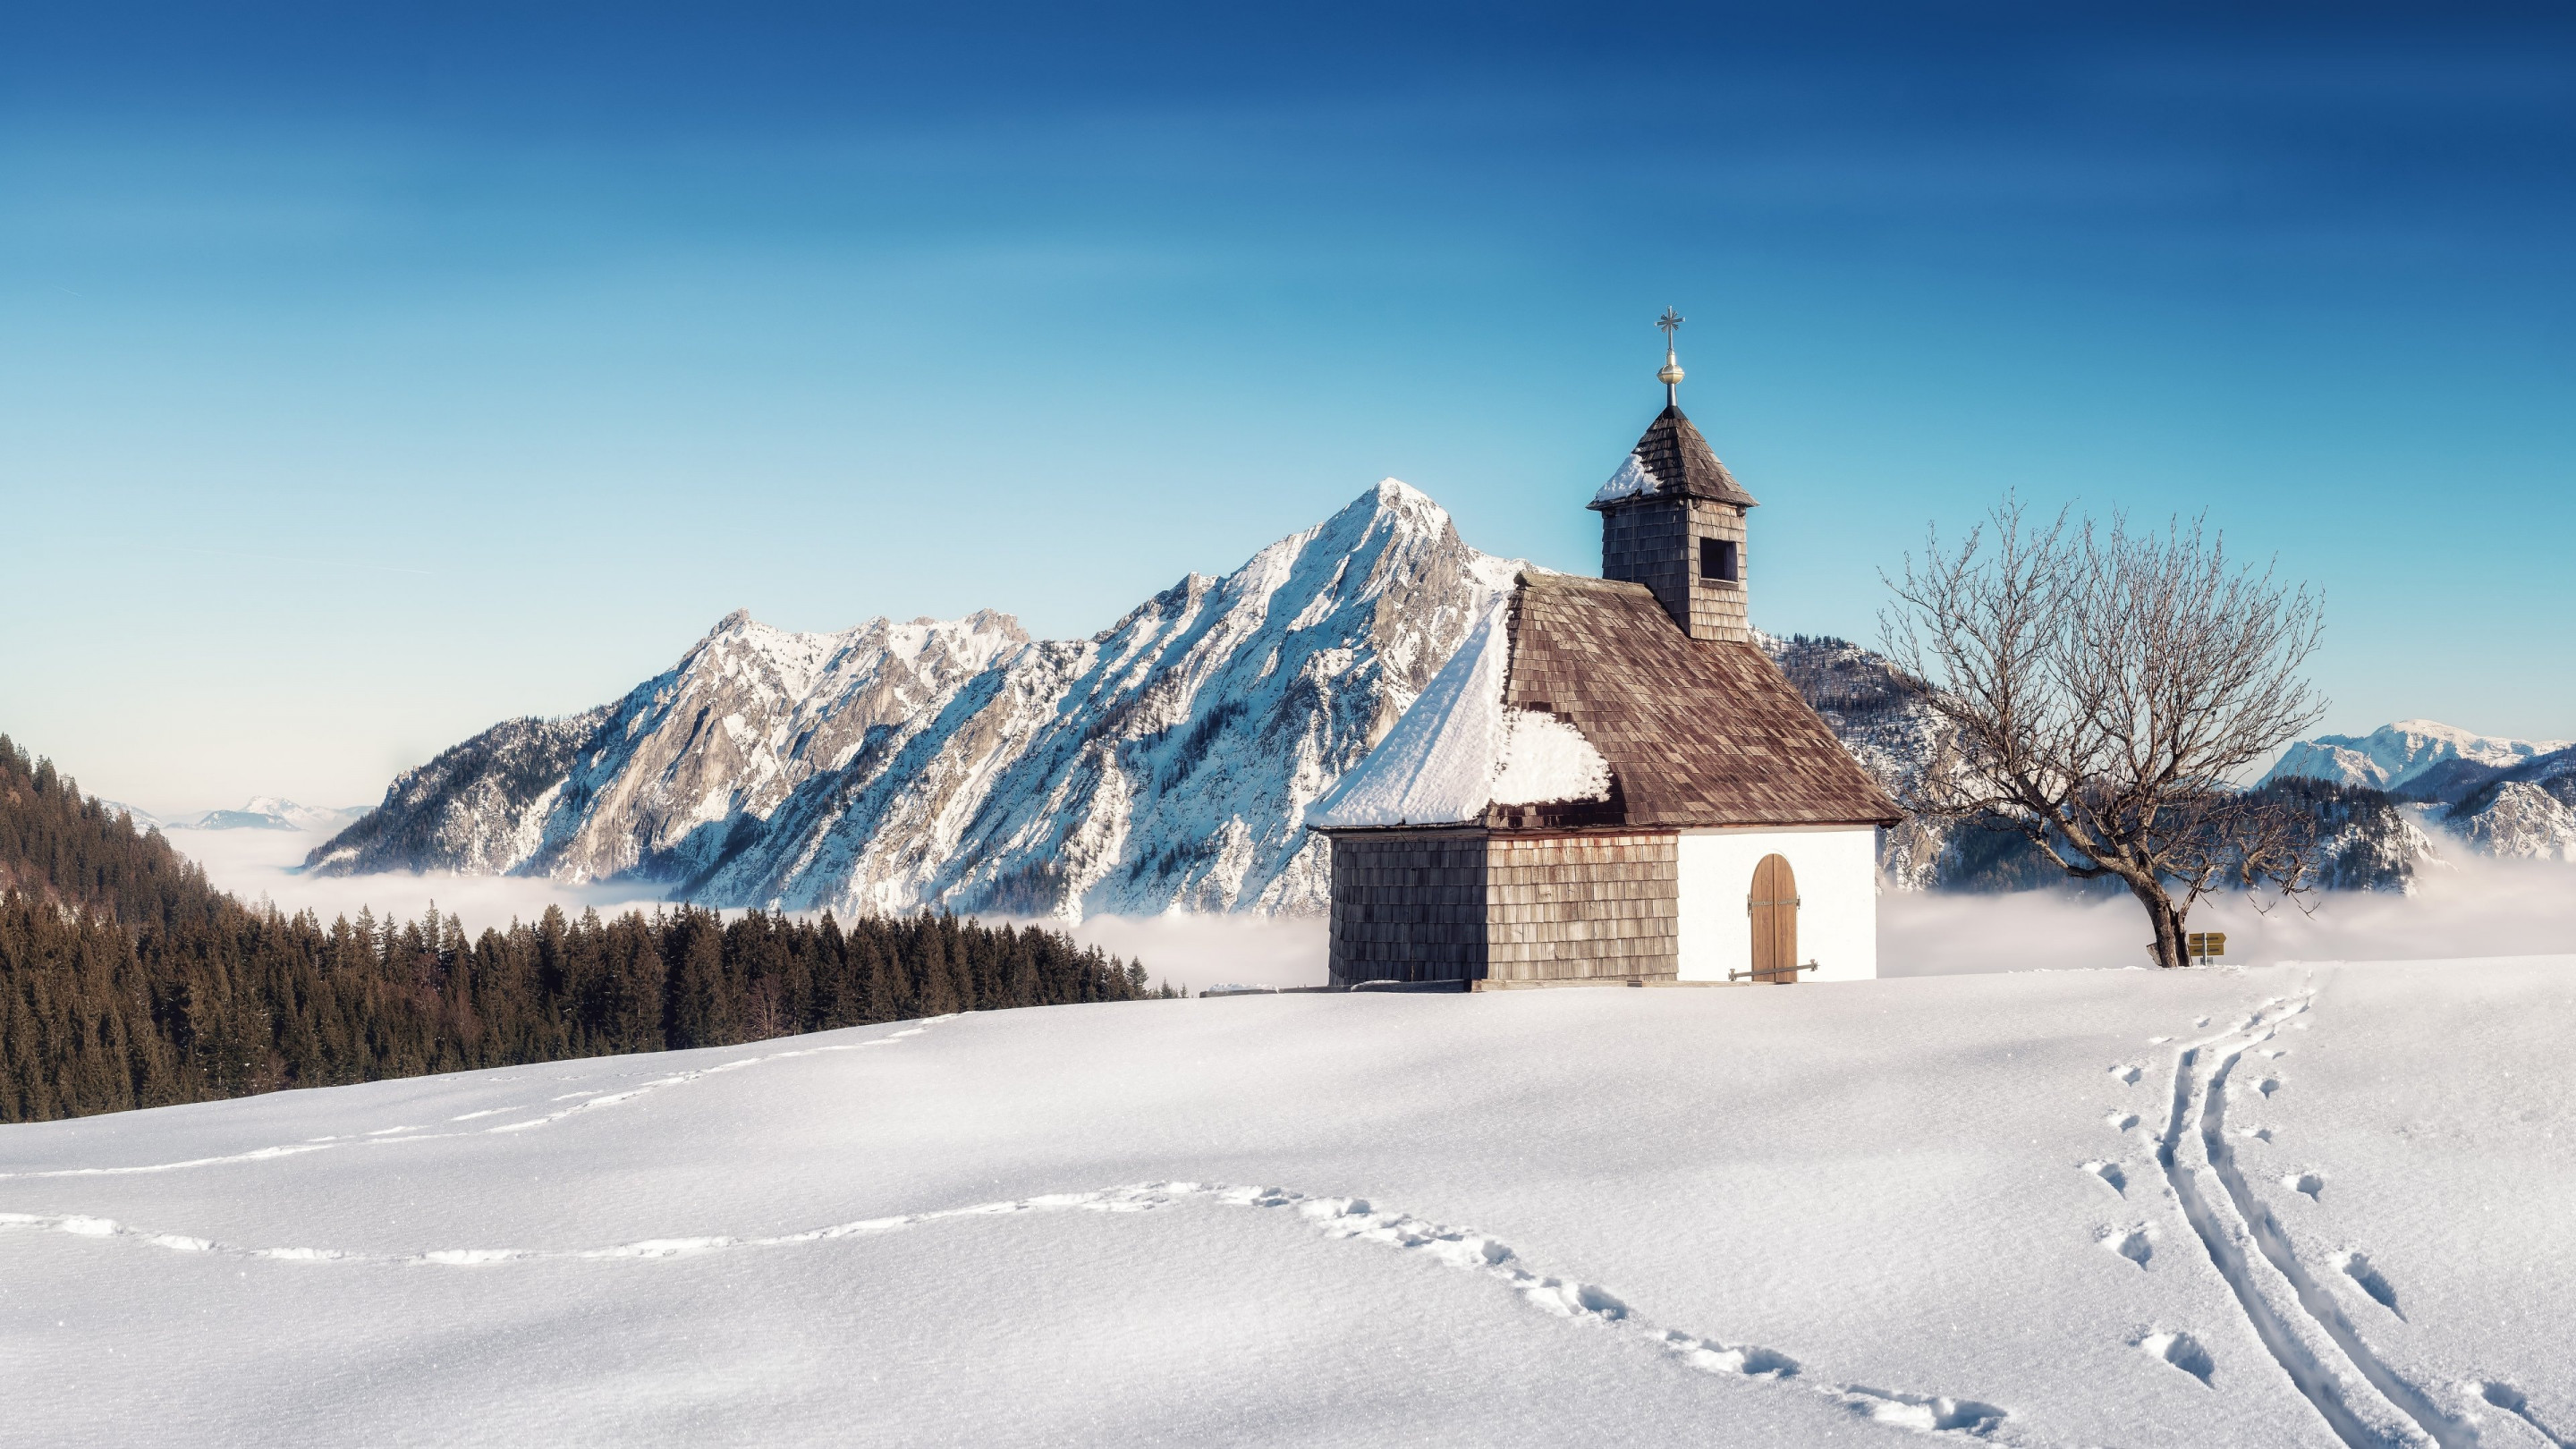 Alpine Winter landscape from Strobl, Austria wallpaper 2880x1620